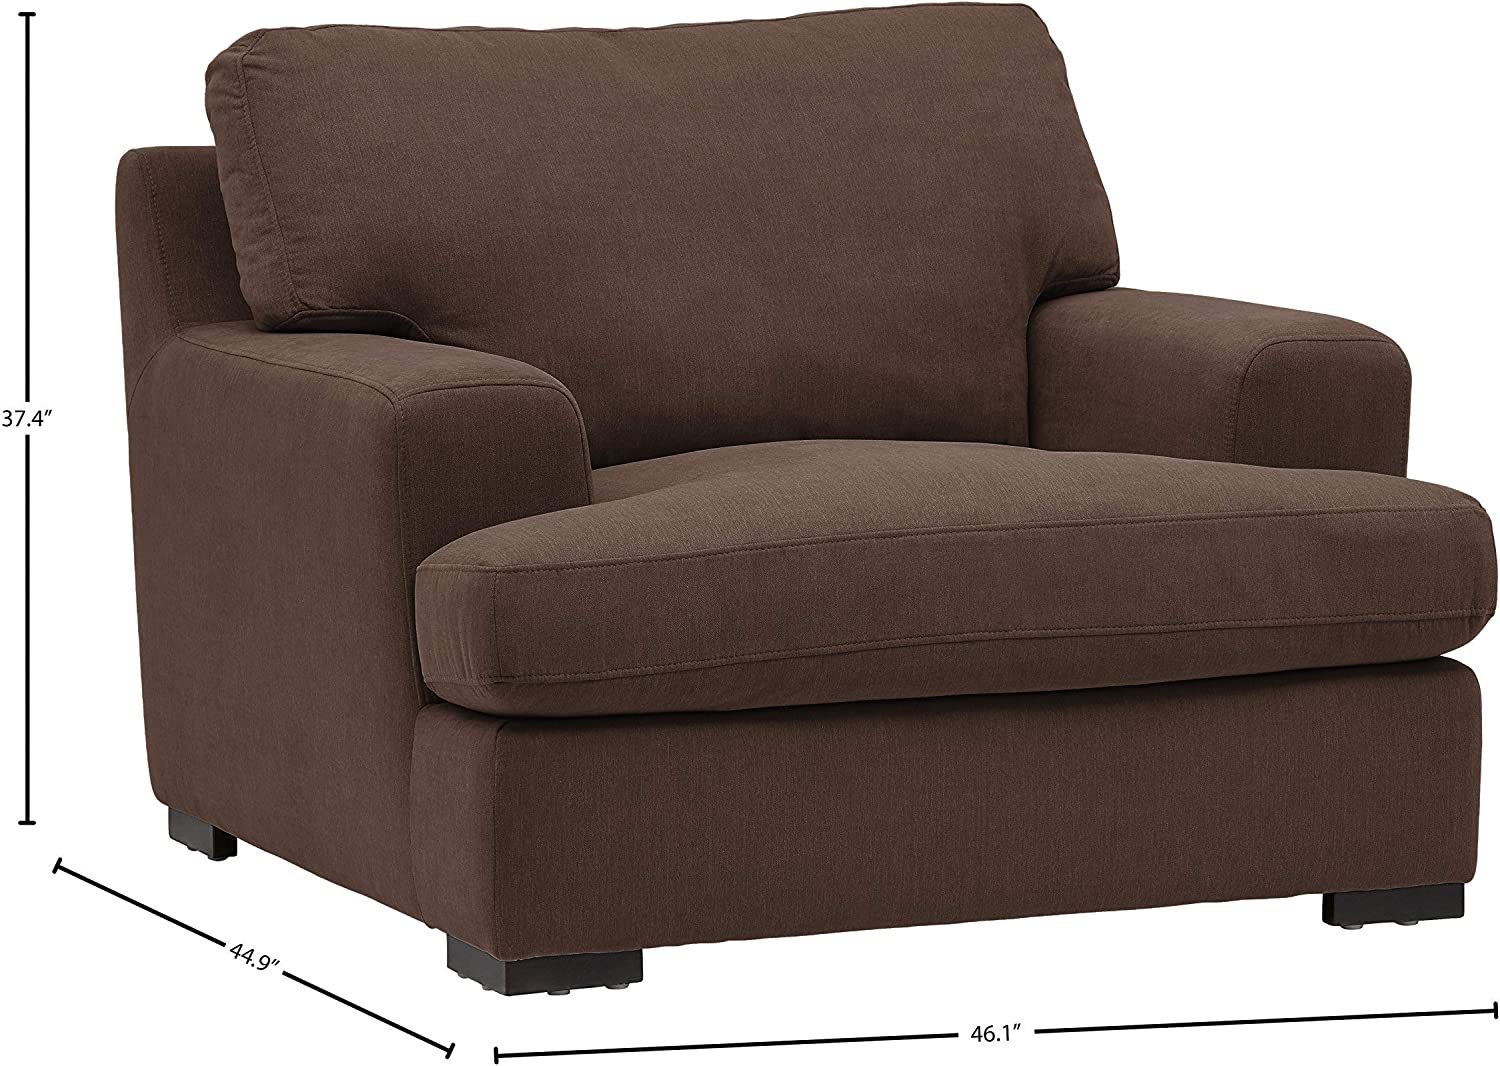 Stone & Beam Lauren Down-Filled Oversized Armchair, 46"W, Chocolate - $435